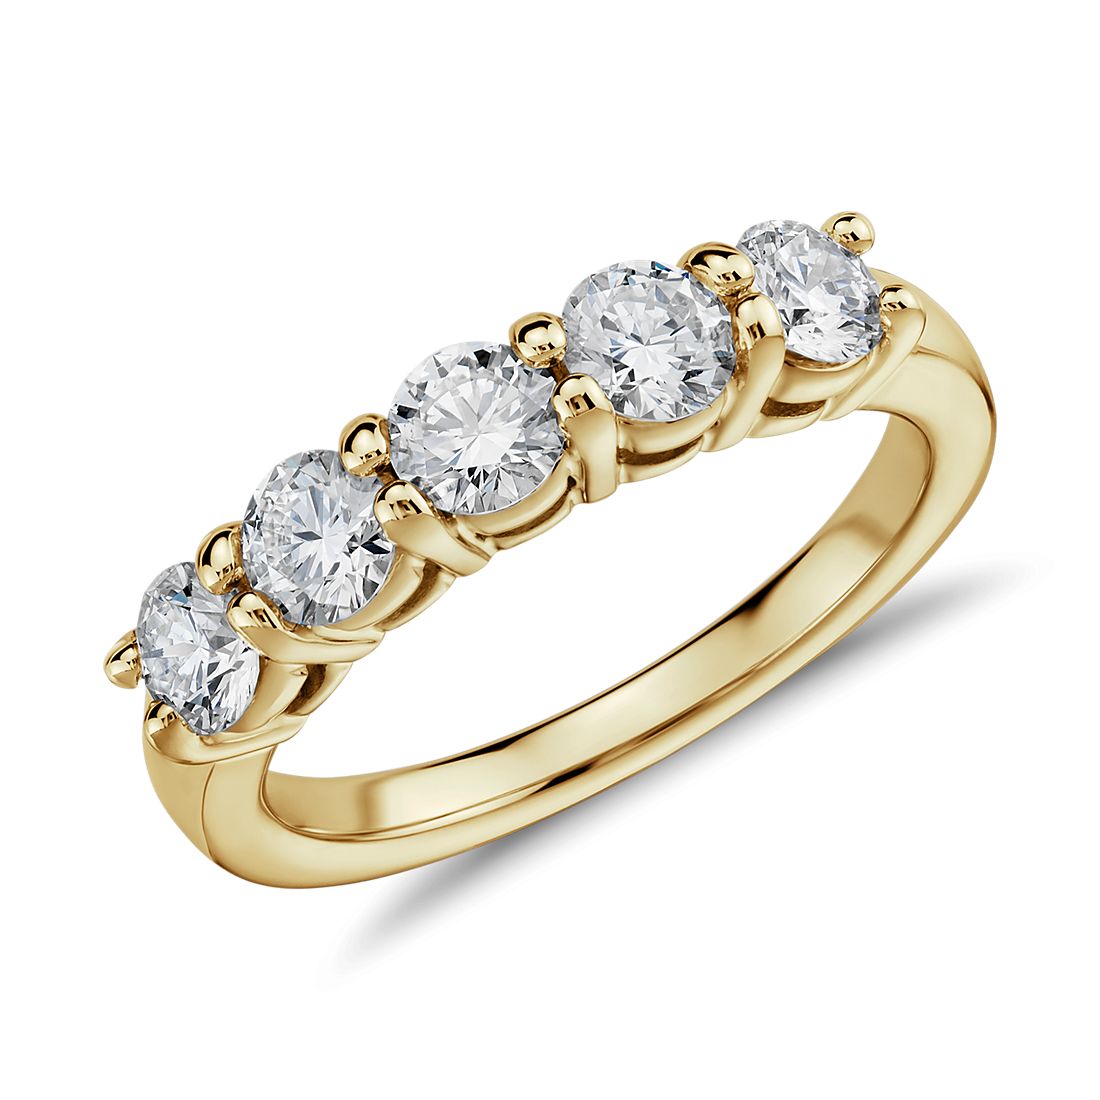 Video Uploaded 14k Yellow Gold Diamond Wedding Ring Round Cut White Diamond Band Ring Designer Ring